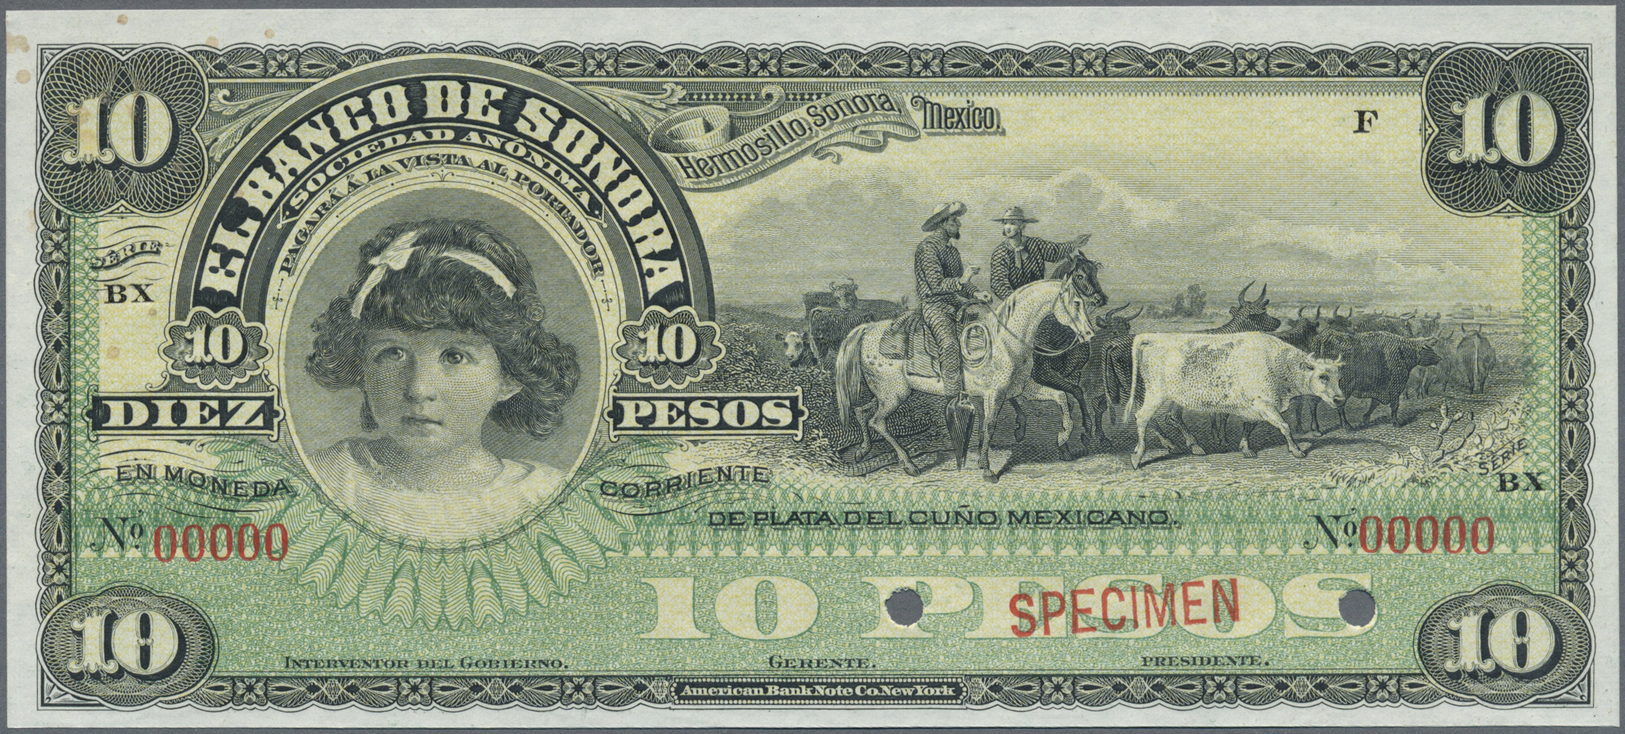 01714 Mexico: El Banco De Sonora 10 Pesos 1899-1911 SPECIMEN, P.S420s, Punch Hole Cancellation And Red Overprint Specime - Mexico